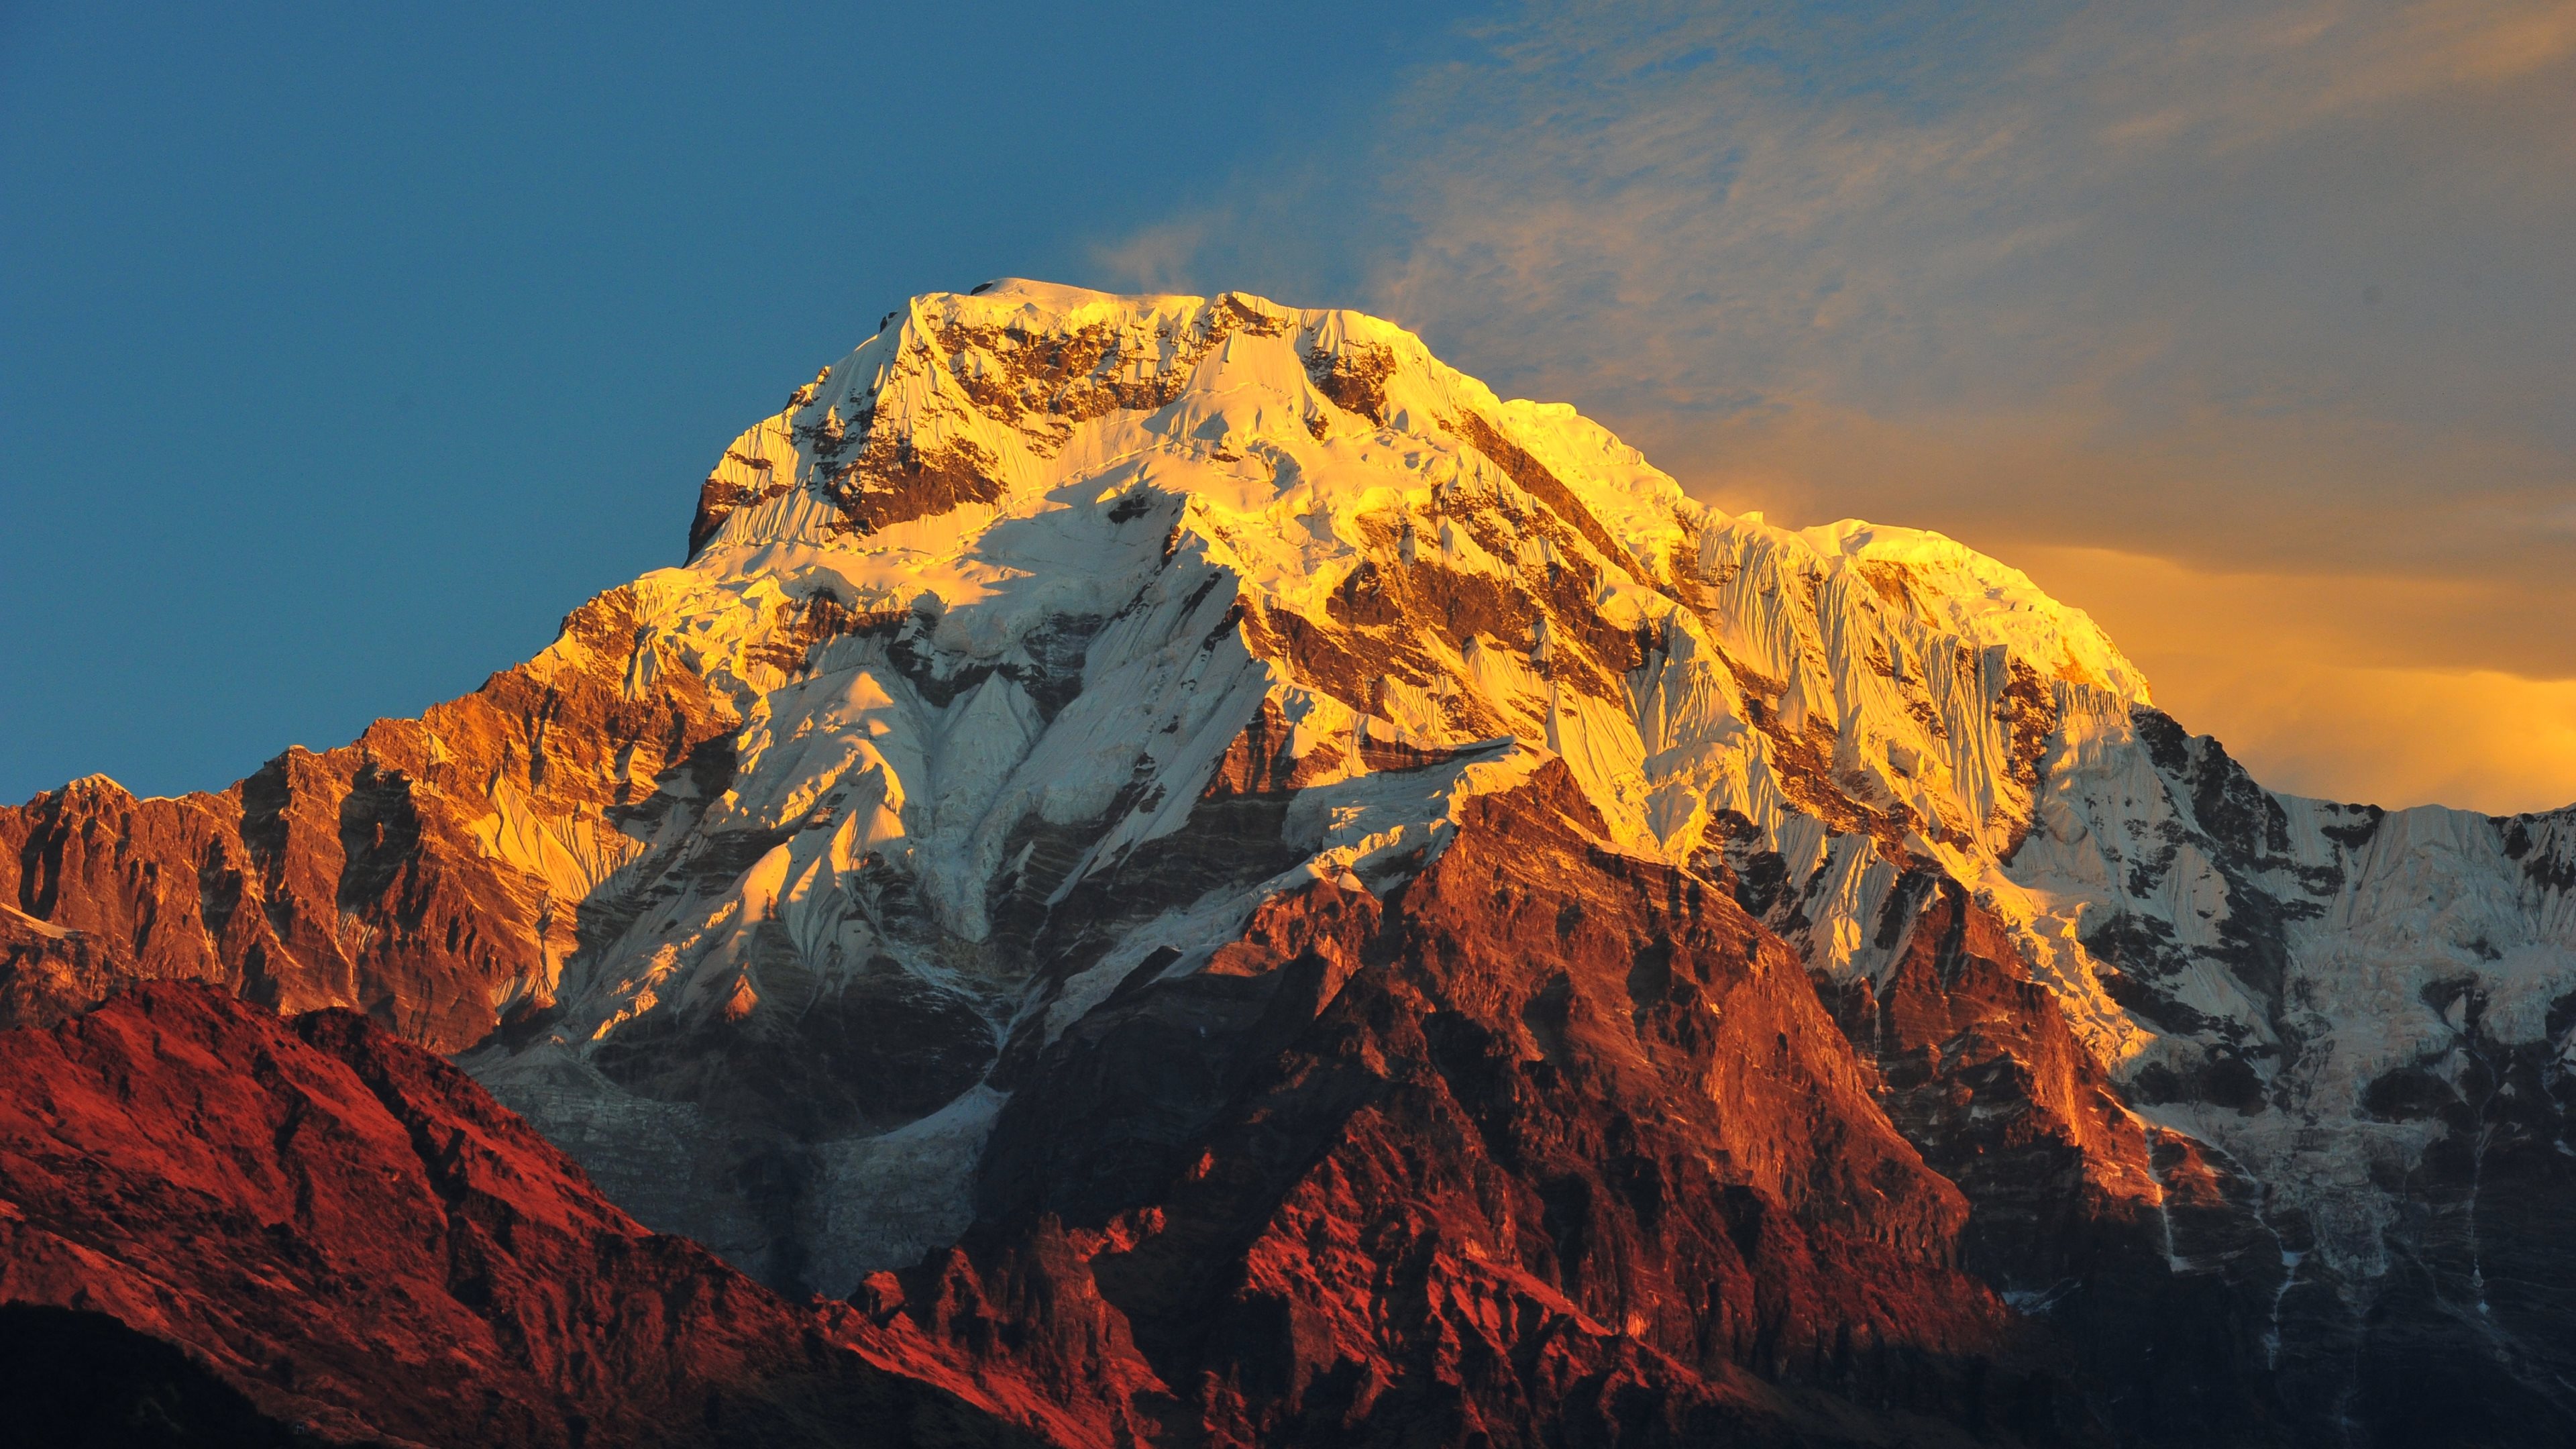 High Definition Mount Everest background